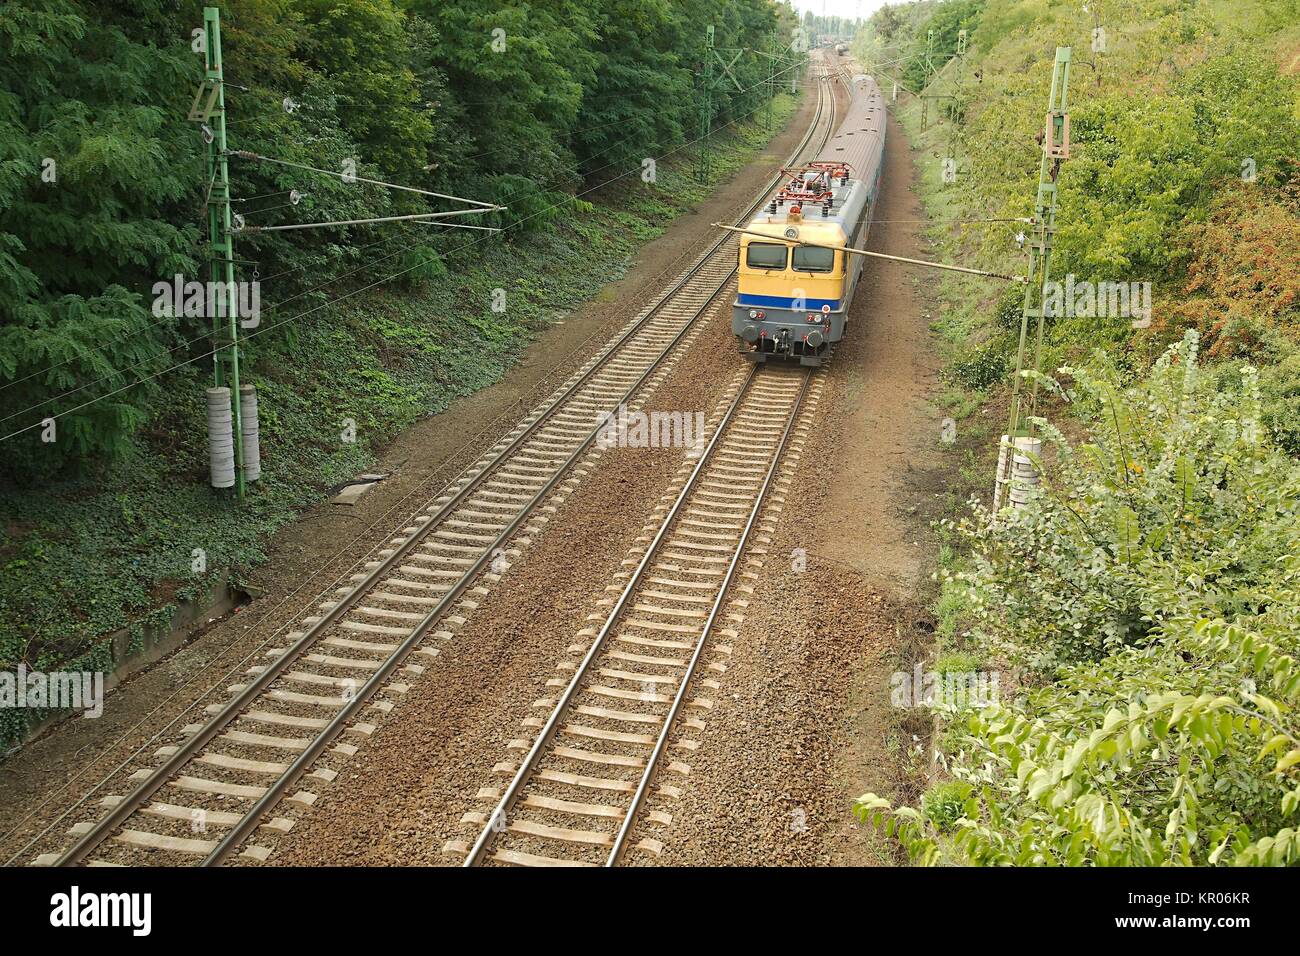 Railway line with train Stock Photo